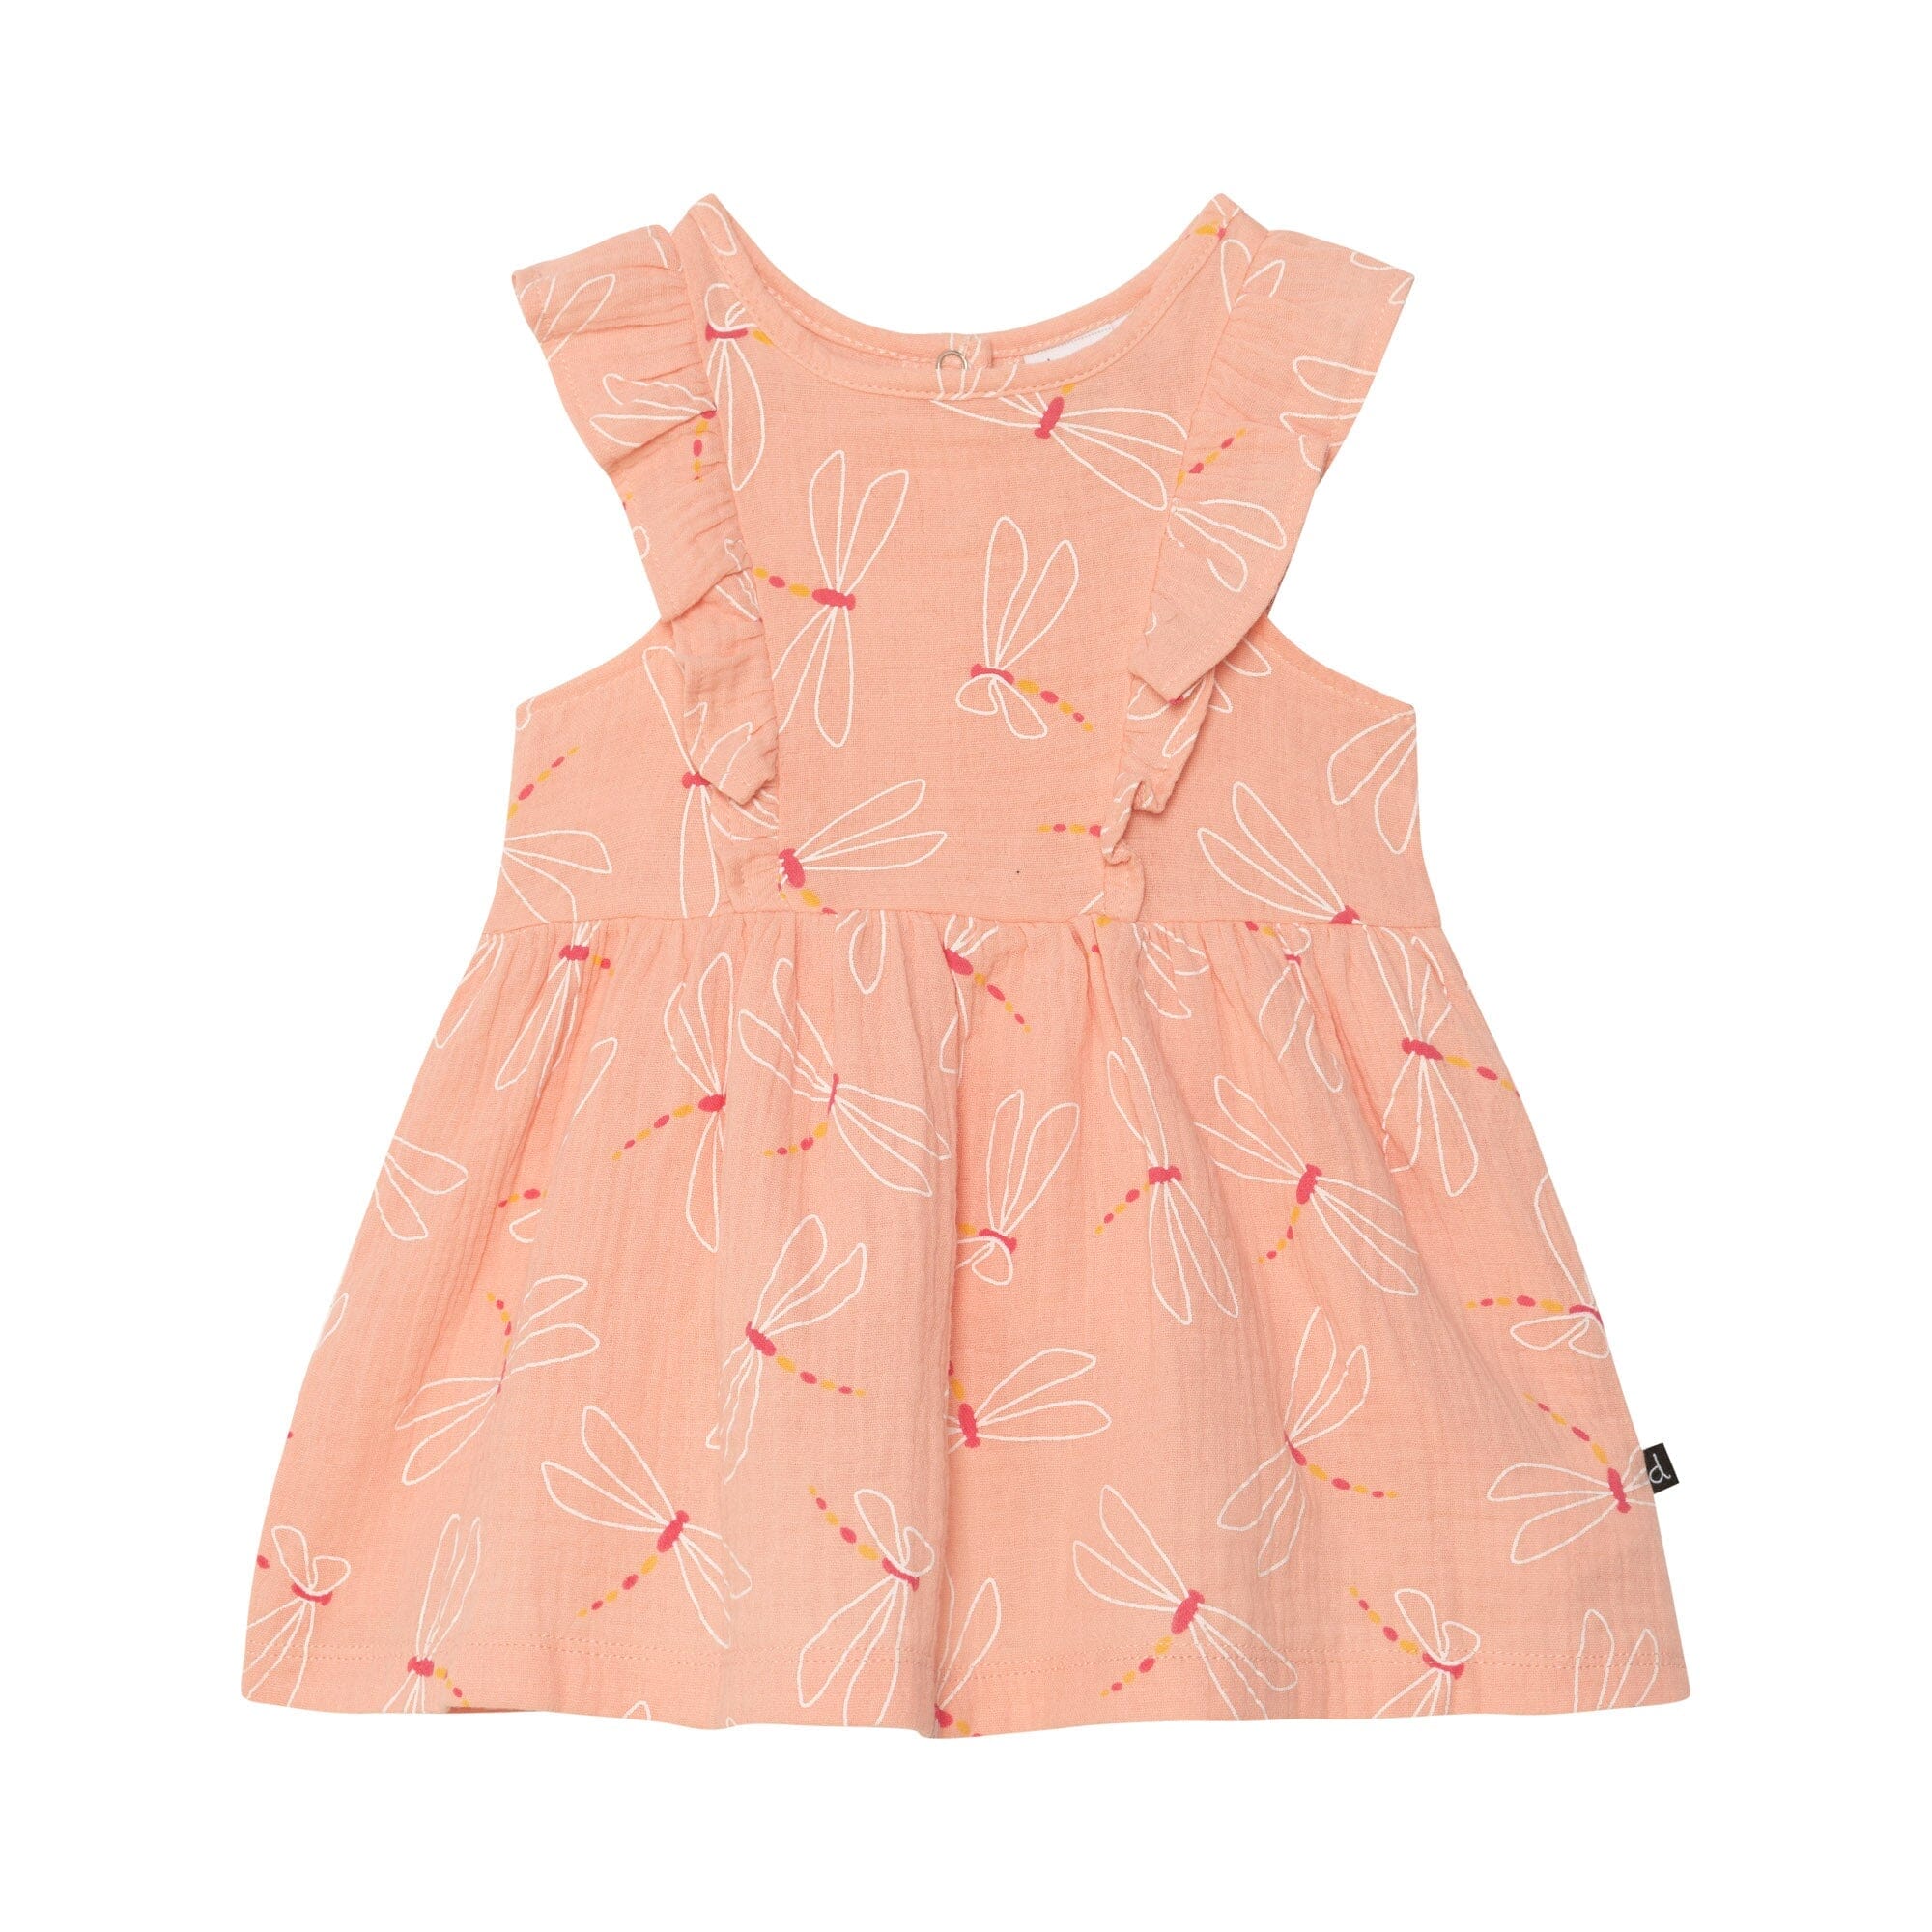 Printed Muslin Cotton Dress Pink Dragonfly - E30B90_061